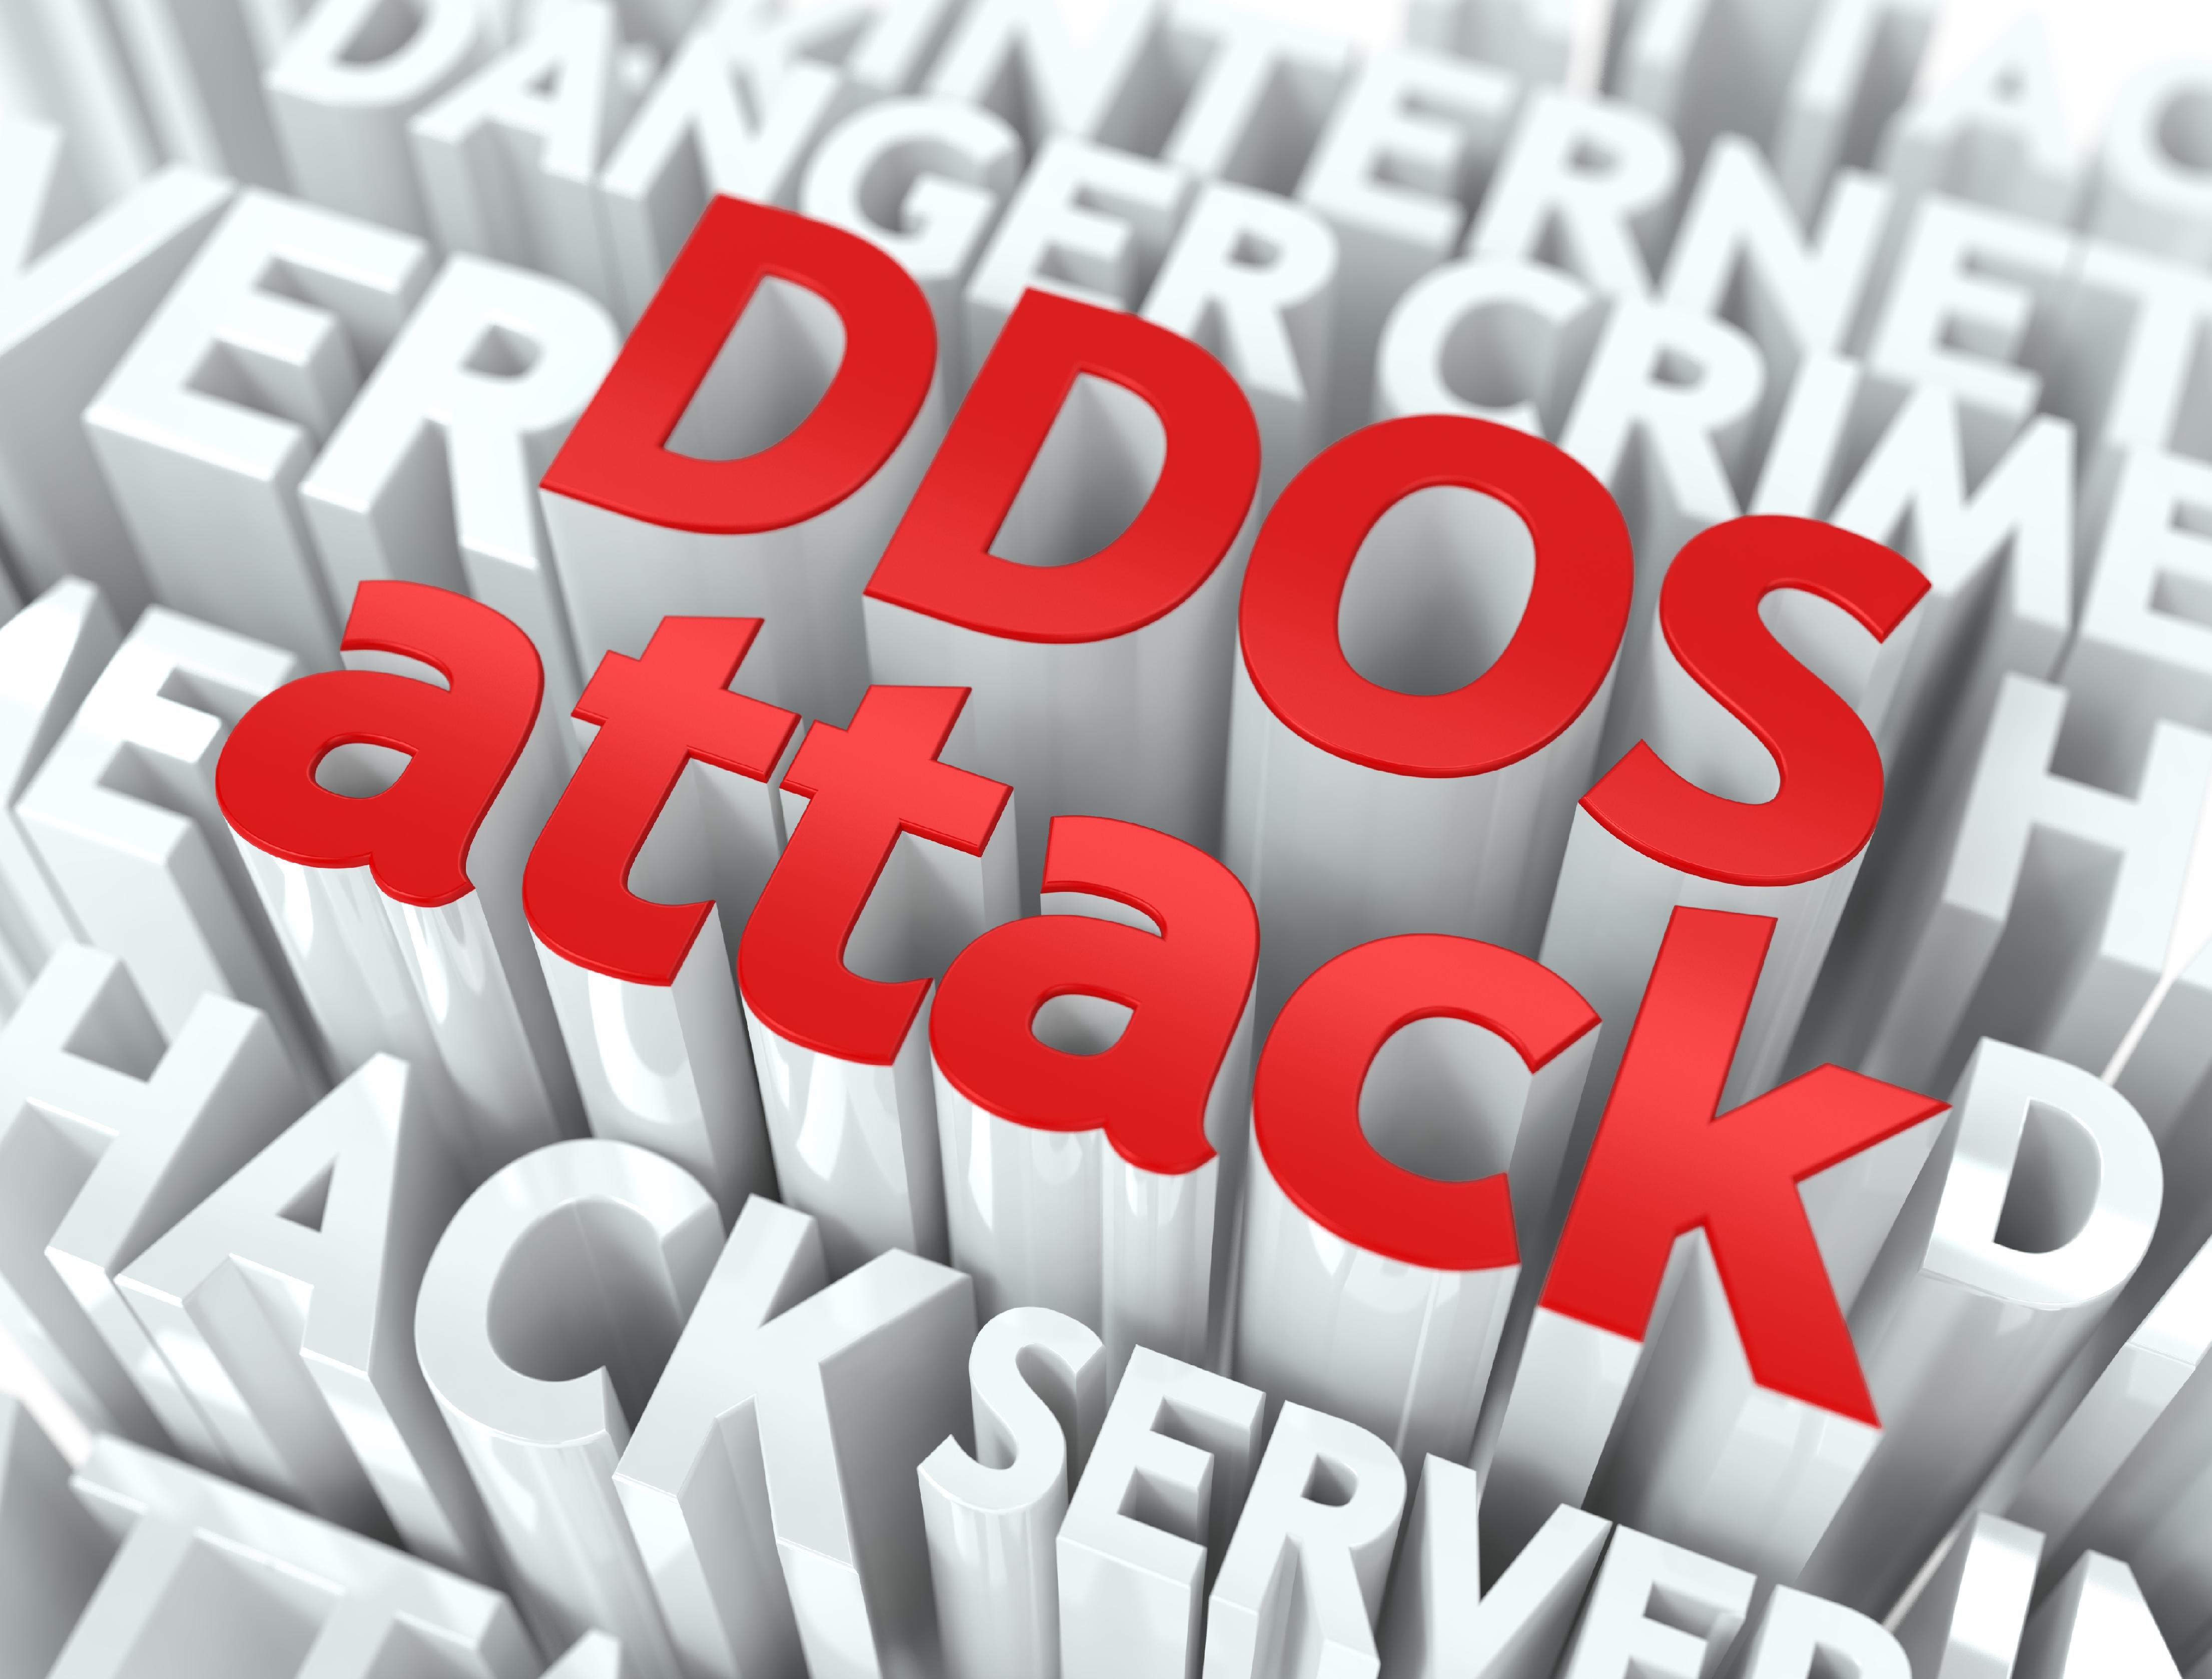 Not-so hidden cobra: North Korea’s alleged DDoS attacks on the United States